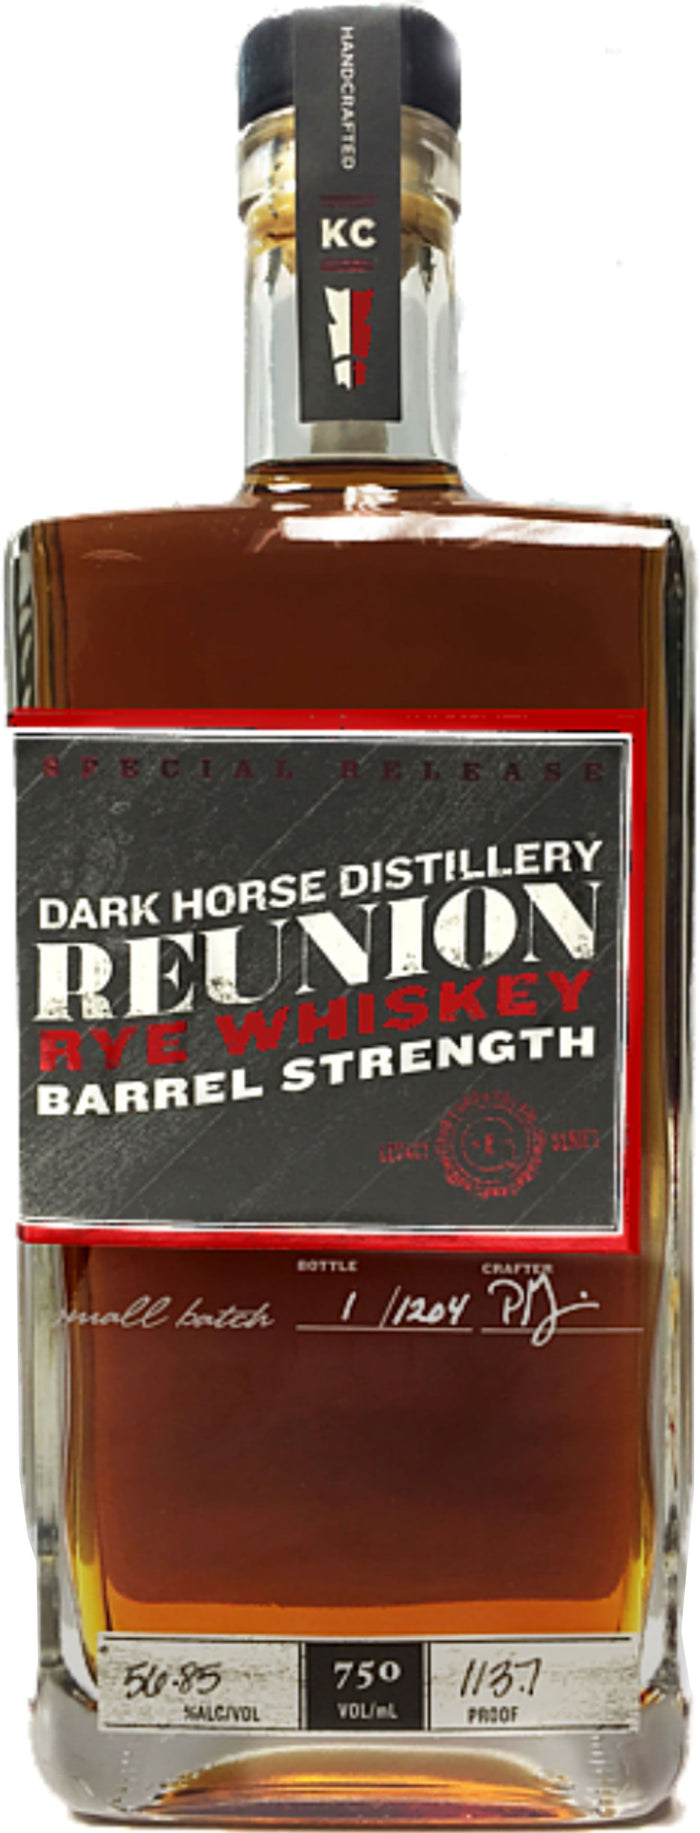 Dark Horse Distillery Barrel Strength Reunion Rye Whiskey